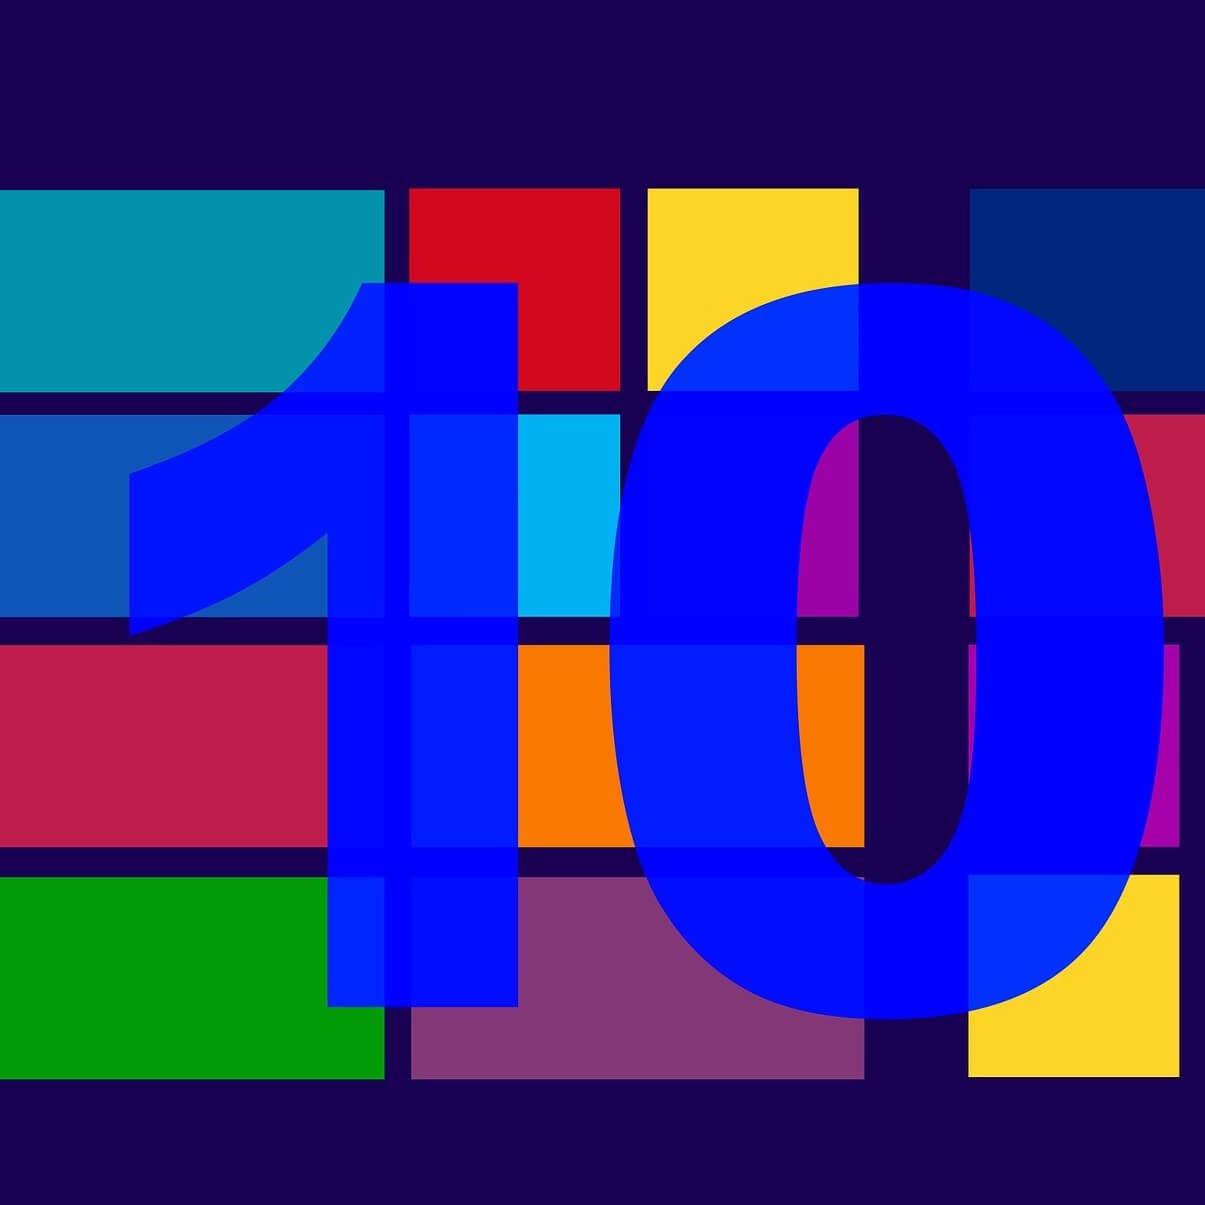 Windows 10 gamer edition OS